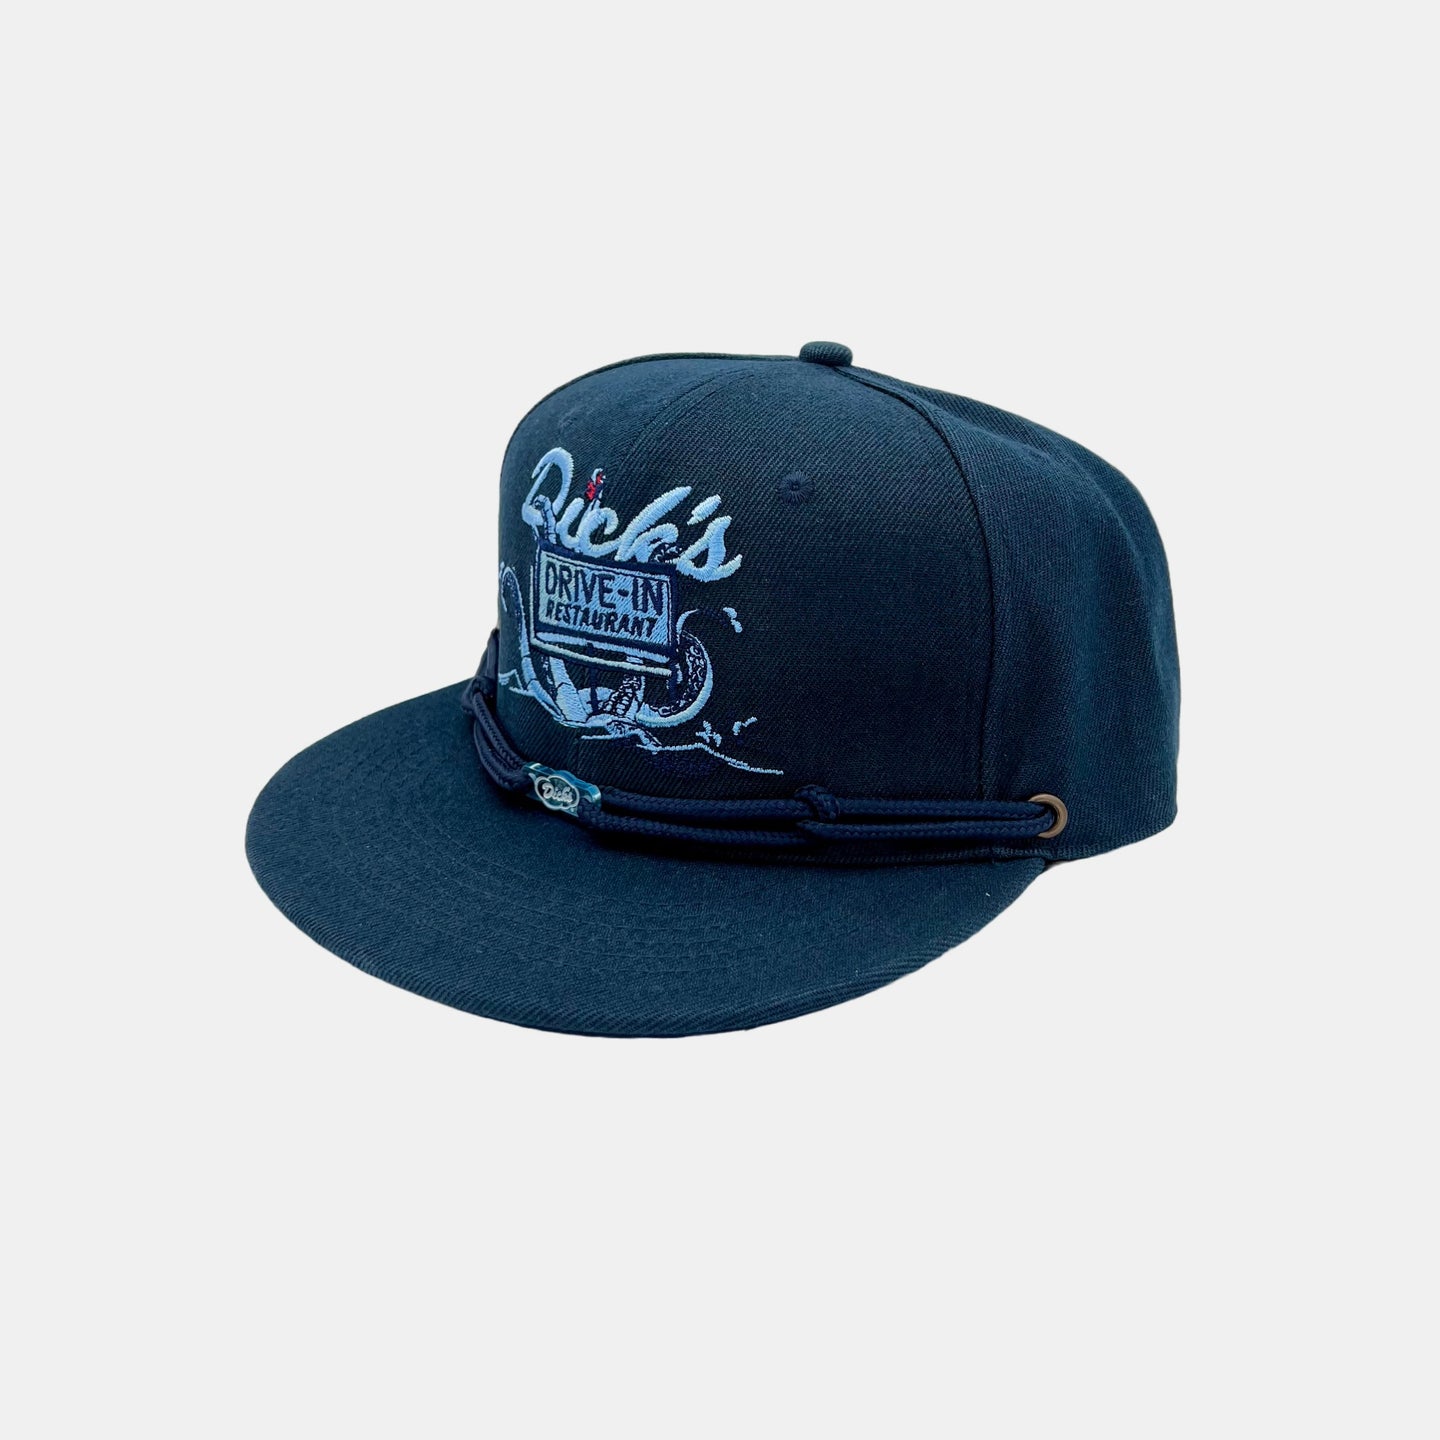 Navy snapback hat w/ light blue 